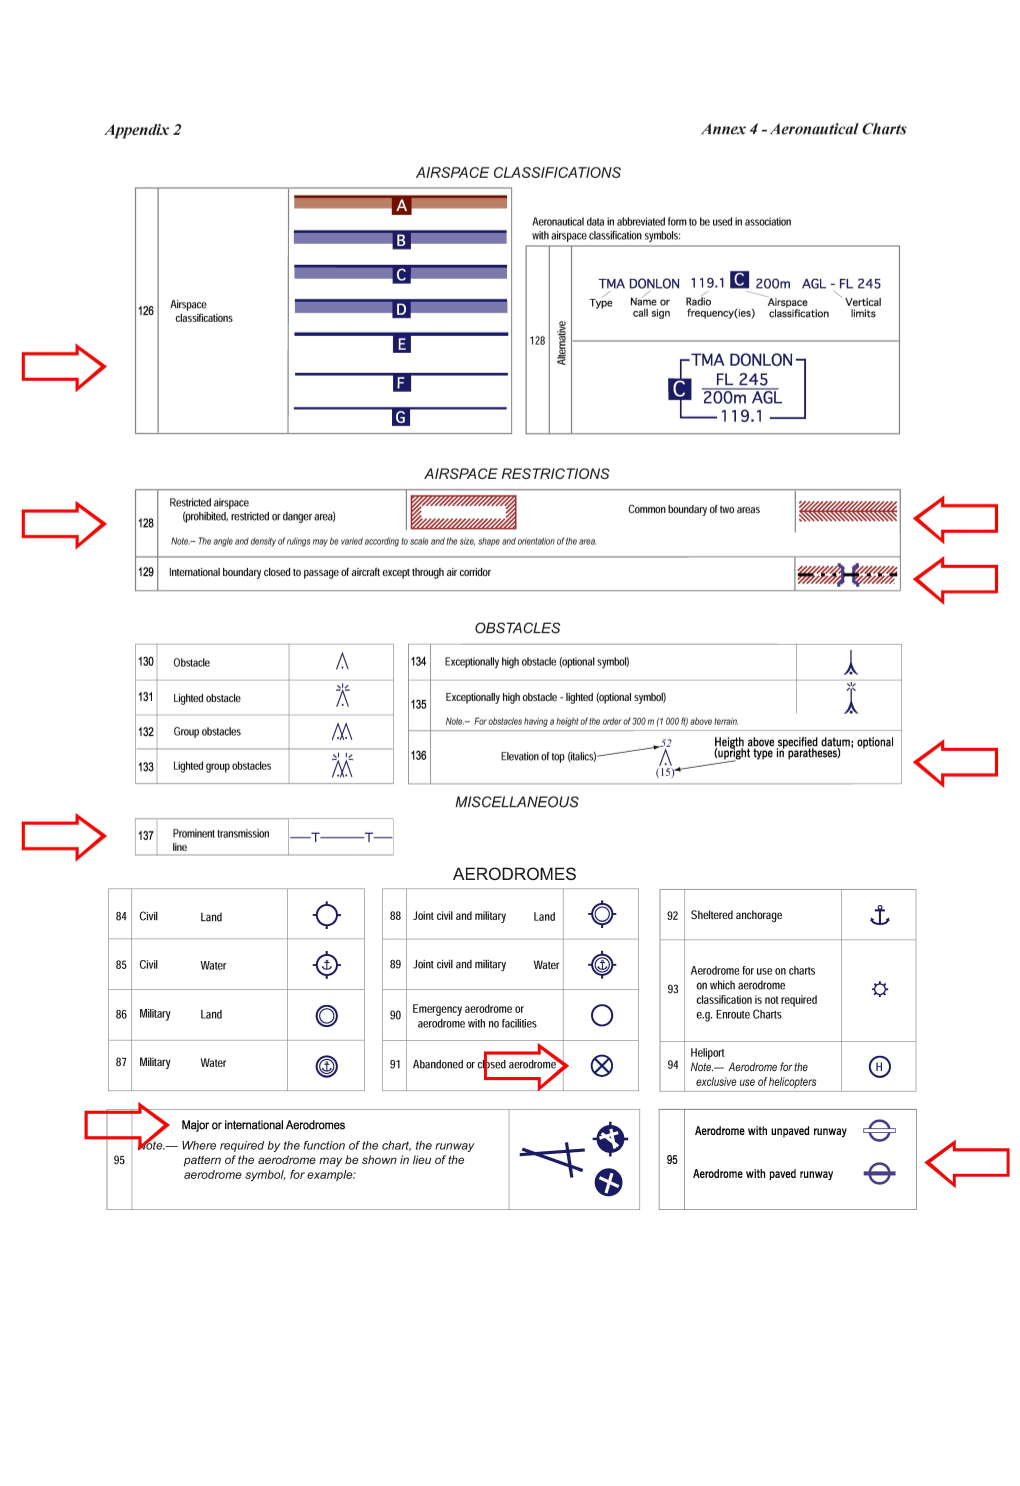 Attachment a - SARPS AMENDMENT PROPOSAL for AERONAUTICAL CHARTS IMPROVEMENT (ANNEX 4)